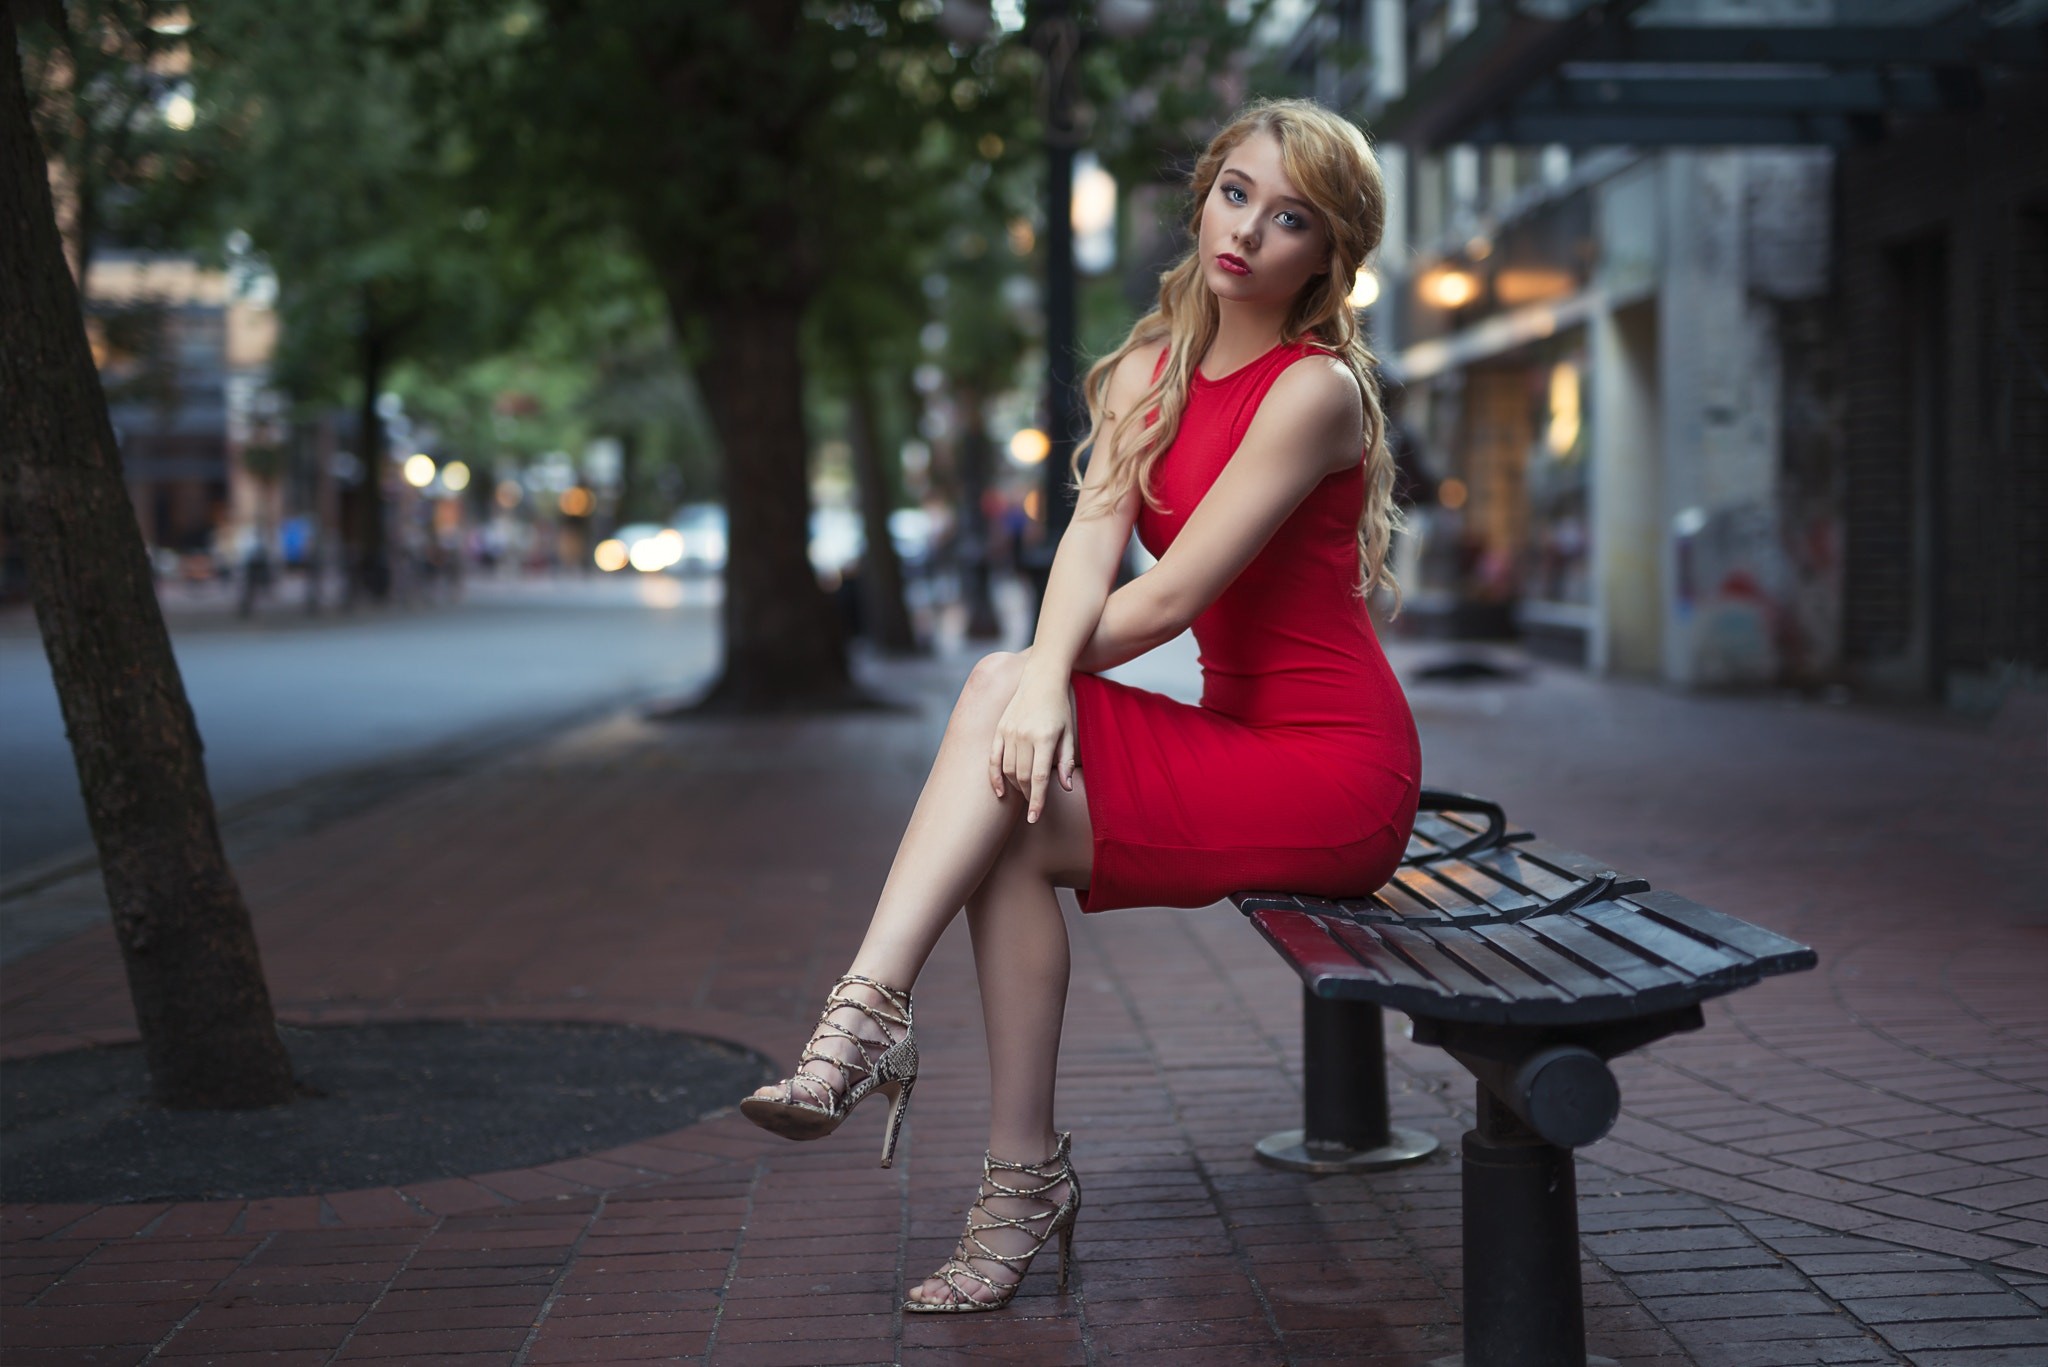 People 2048x1367 women outdoors urban legs bench city blonde dress red dress sitting Kyle Cong women model 500px high heels feet Madison (model)